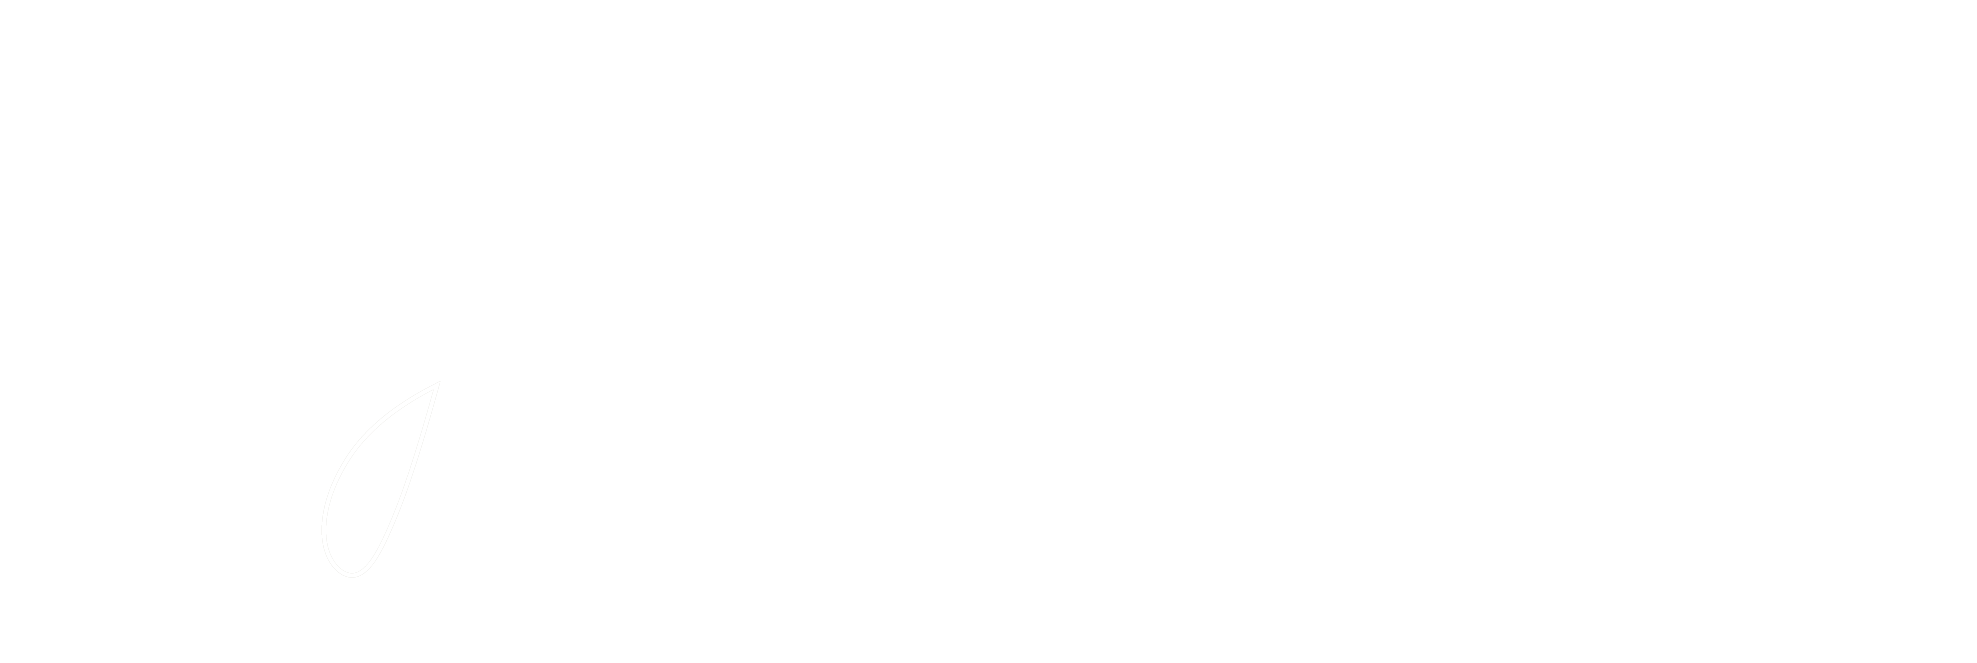 Liberty Pass Yachting